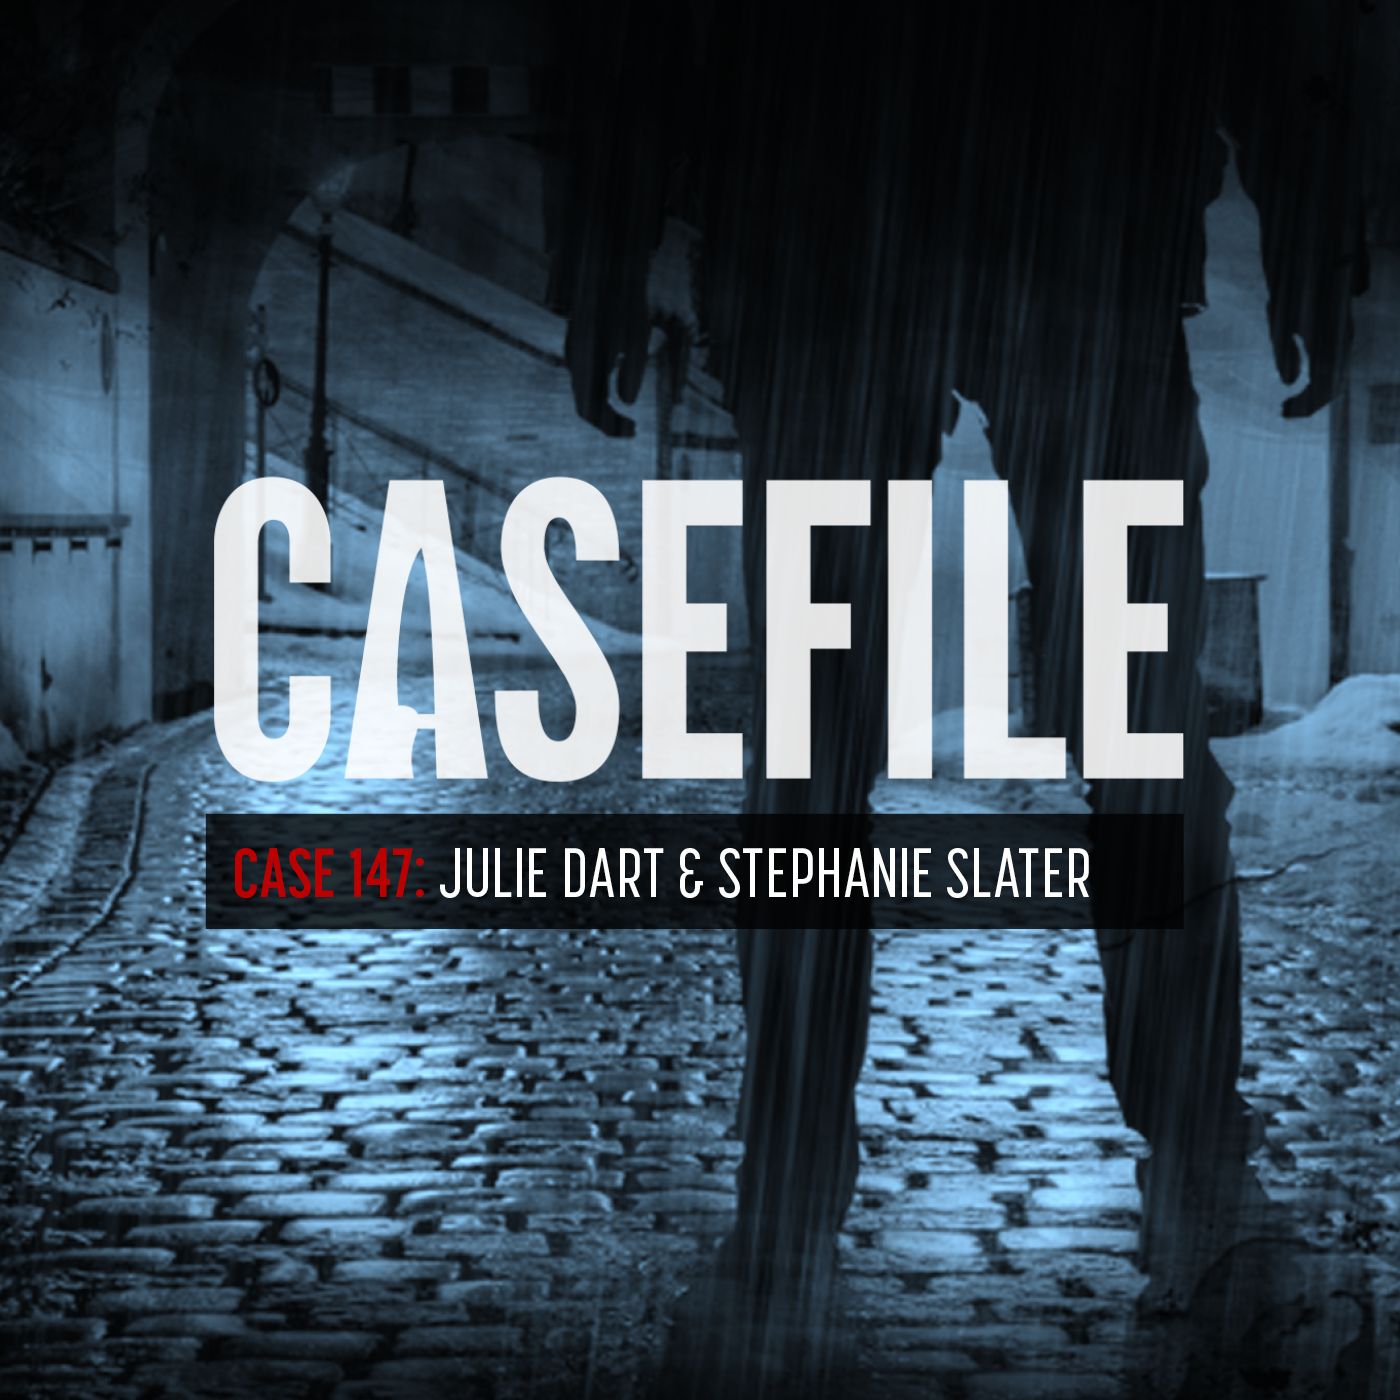 Case 147: Julie Dart & Stephanie Slater